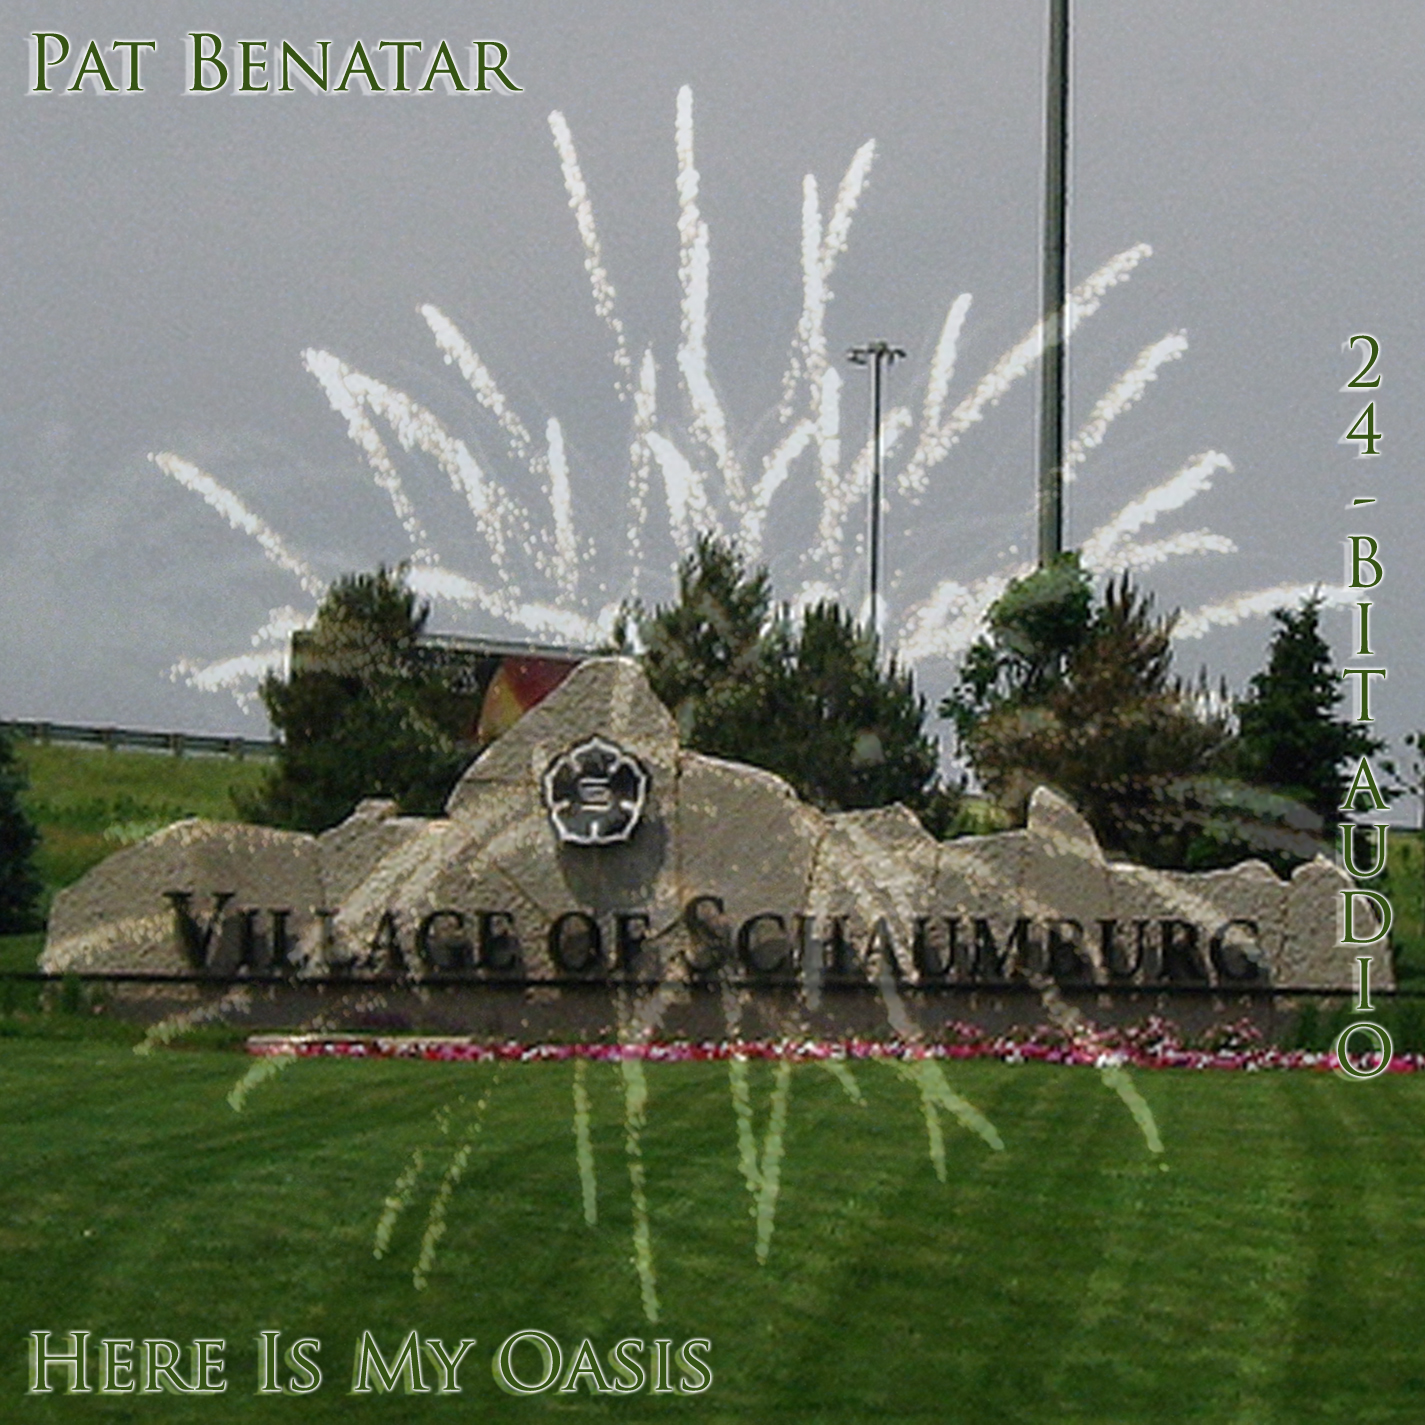 Pat Benatar - Here Is My Oasis - Cover (24bit version - audio dvd)